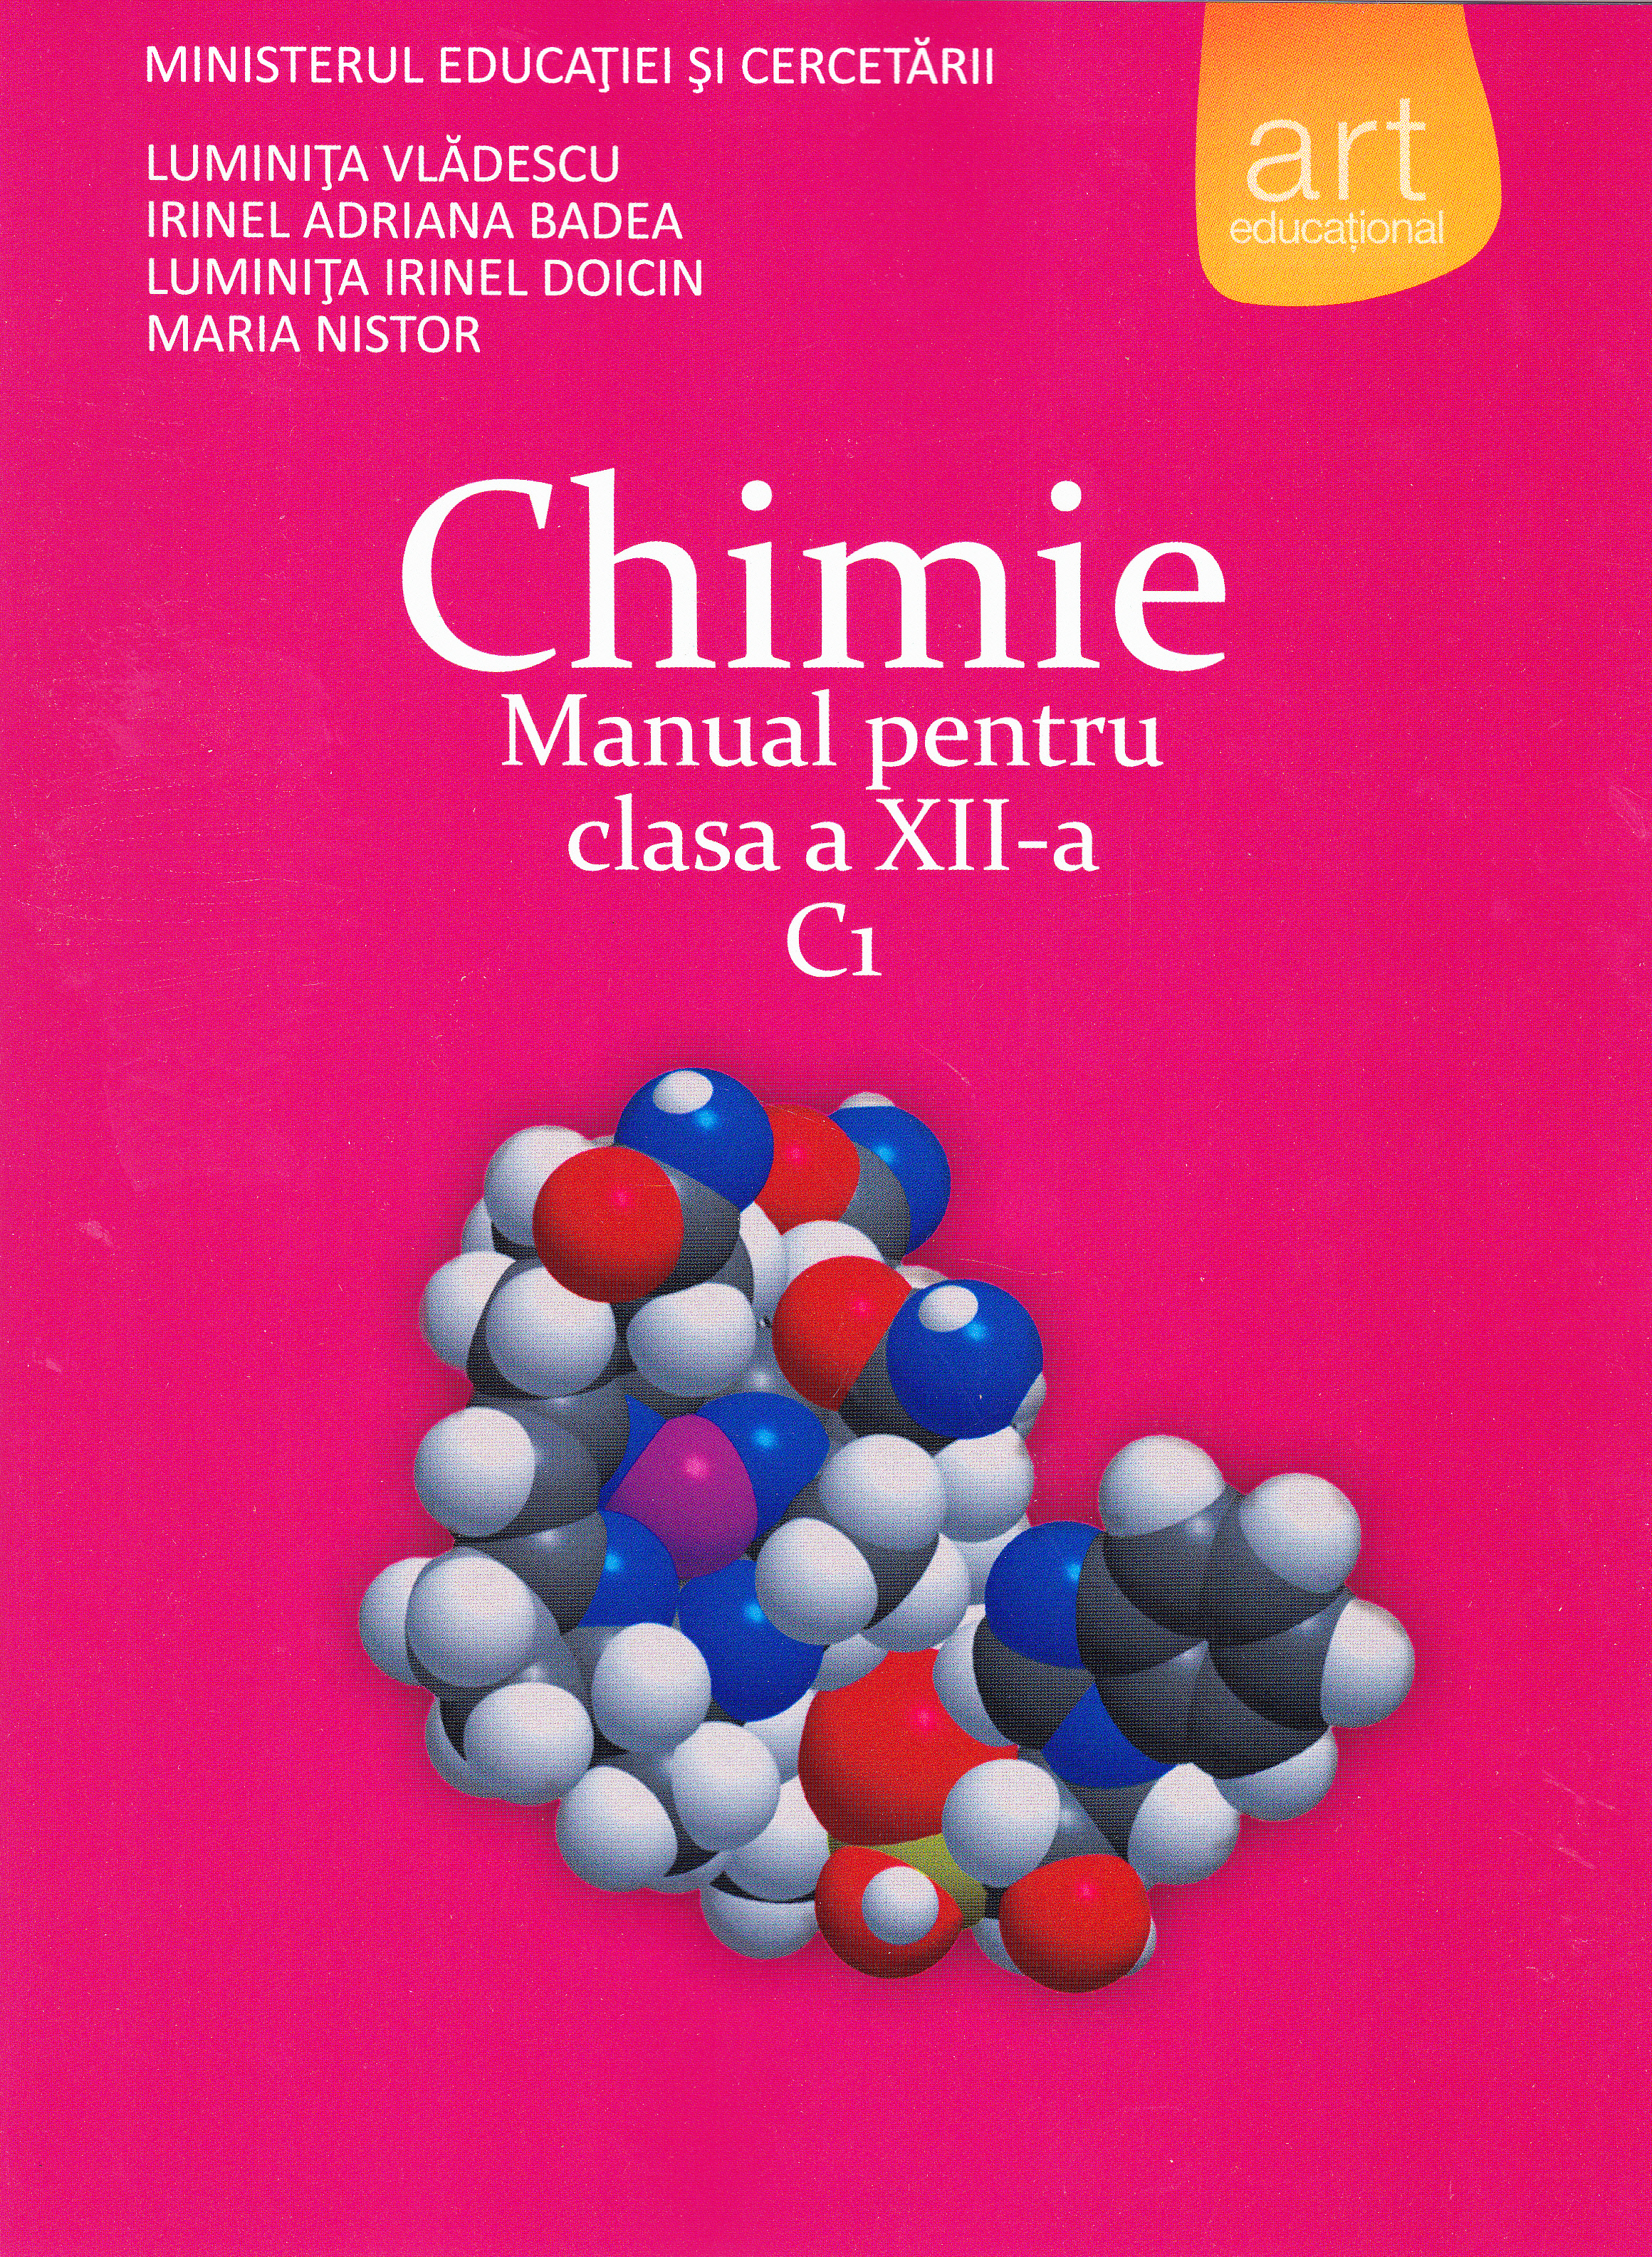 Chimie C1 - Clasa 12 - Manual - Luminita Vladescu, Irinel Adriana Badea